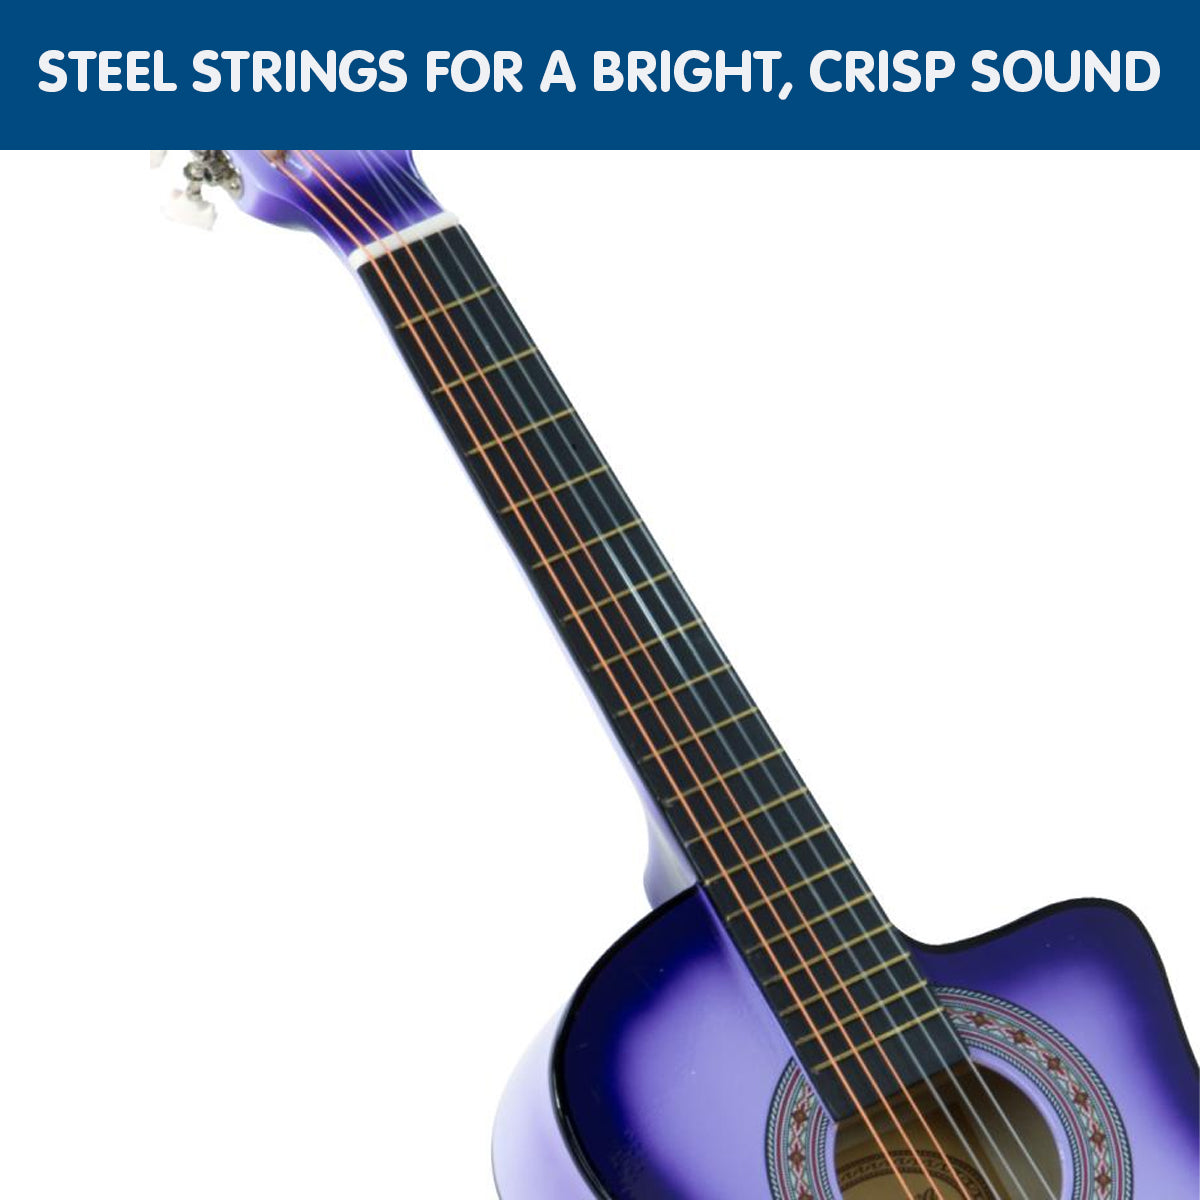 Karrera 38in Cutaway Acoustic Guitar with guitar bag - Purple Burst - SILBERSHELL